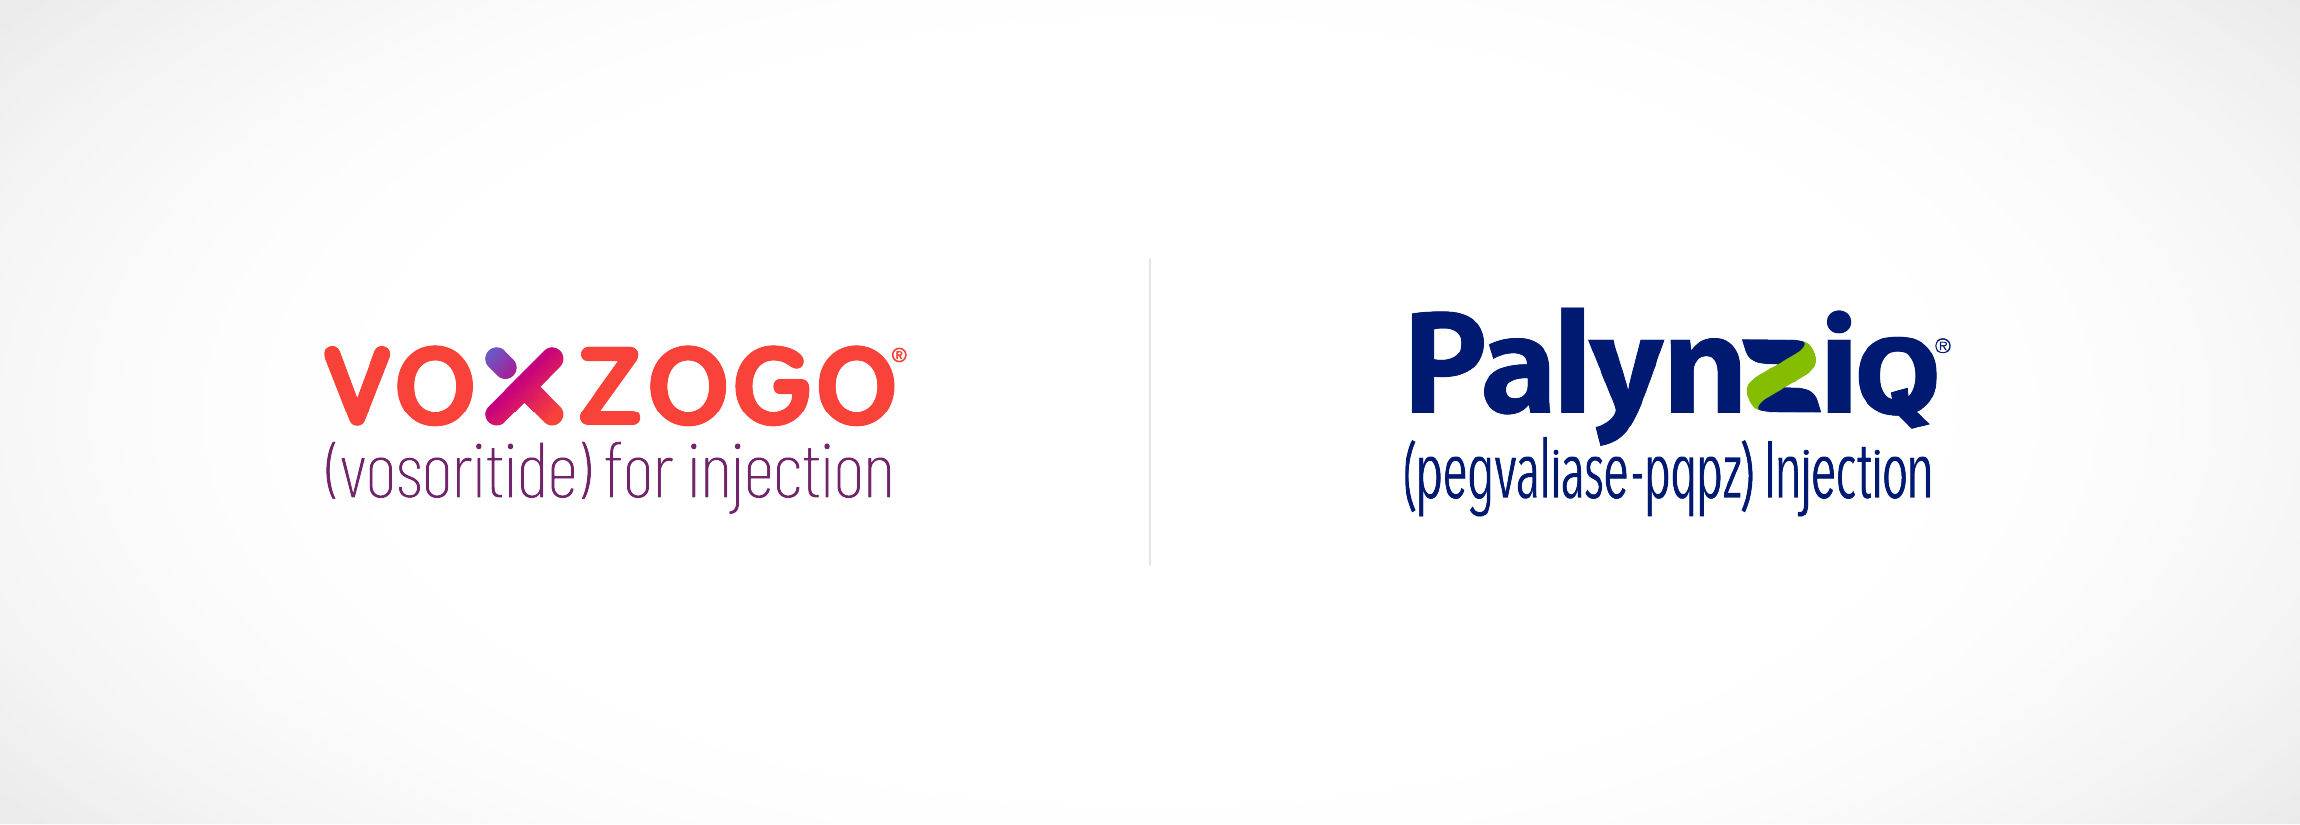 VOXZOGO and PALYNZIQ Logos